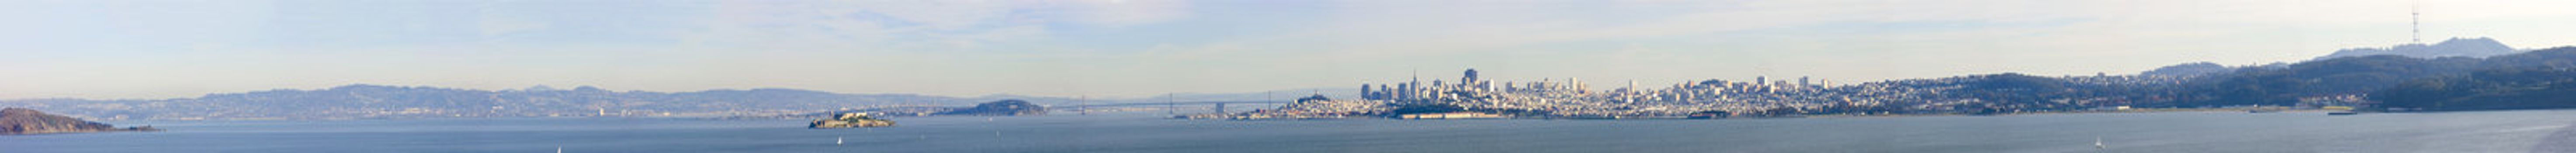 Panorama of San Francisco Bay from Sausalito in Marin county